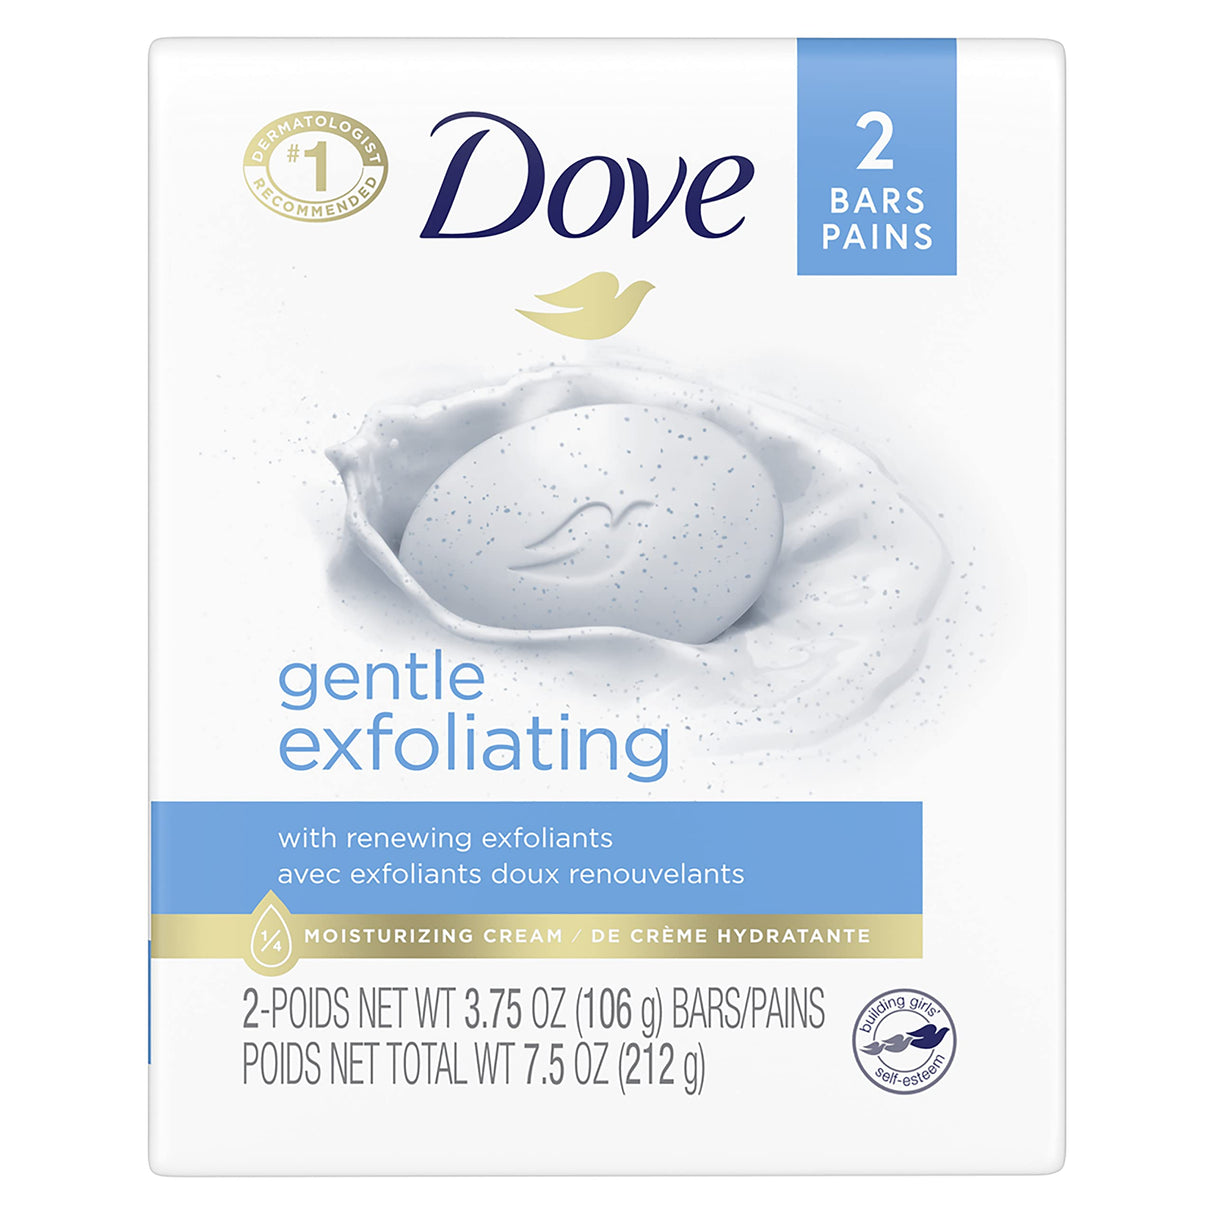 Dove Gentle exfoliating 2 Bar Soap